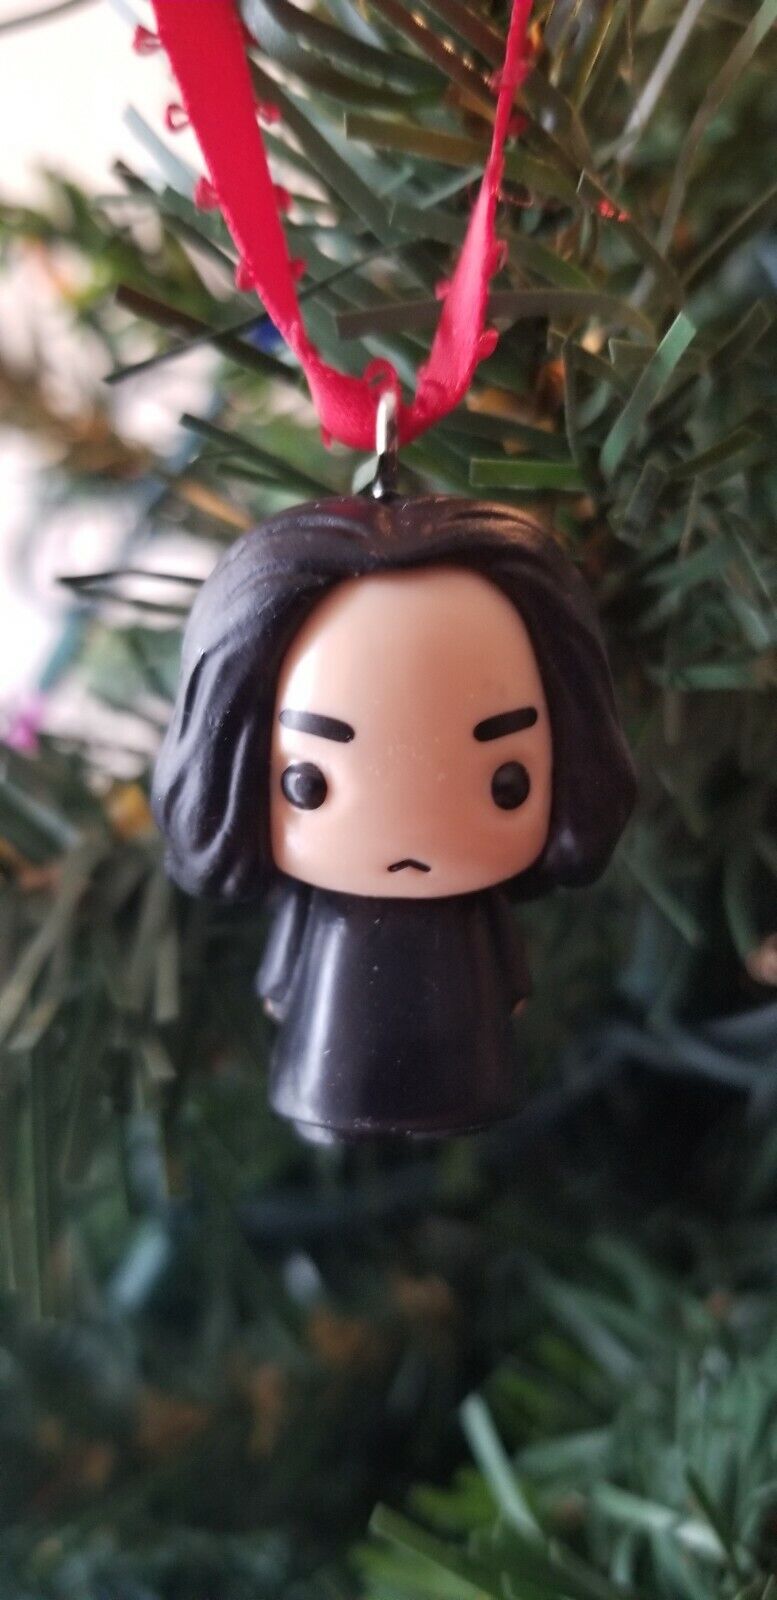 Harry Potter Professor Severus Snape Ornament Adorable Great Gift New